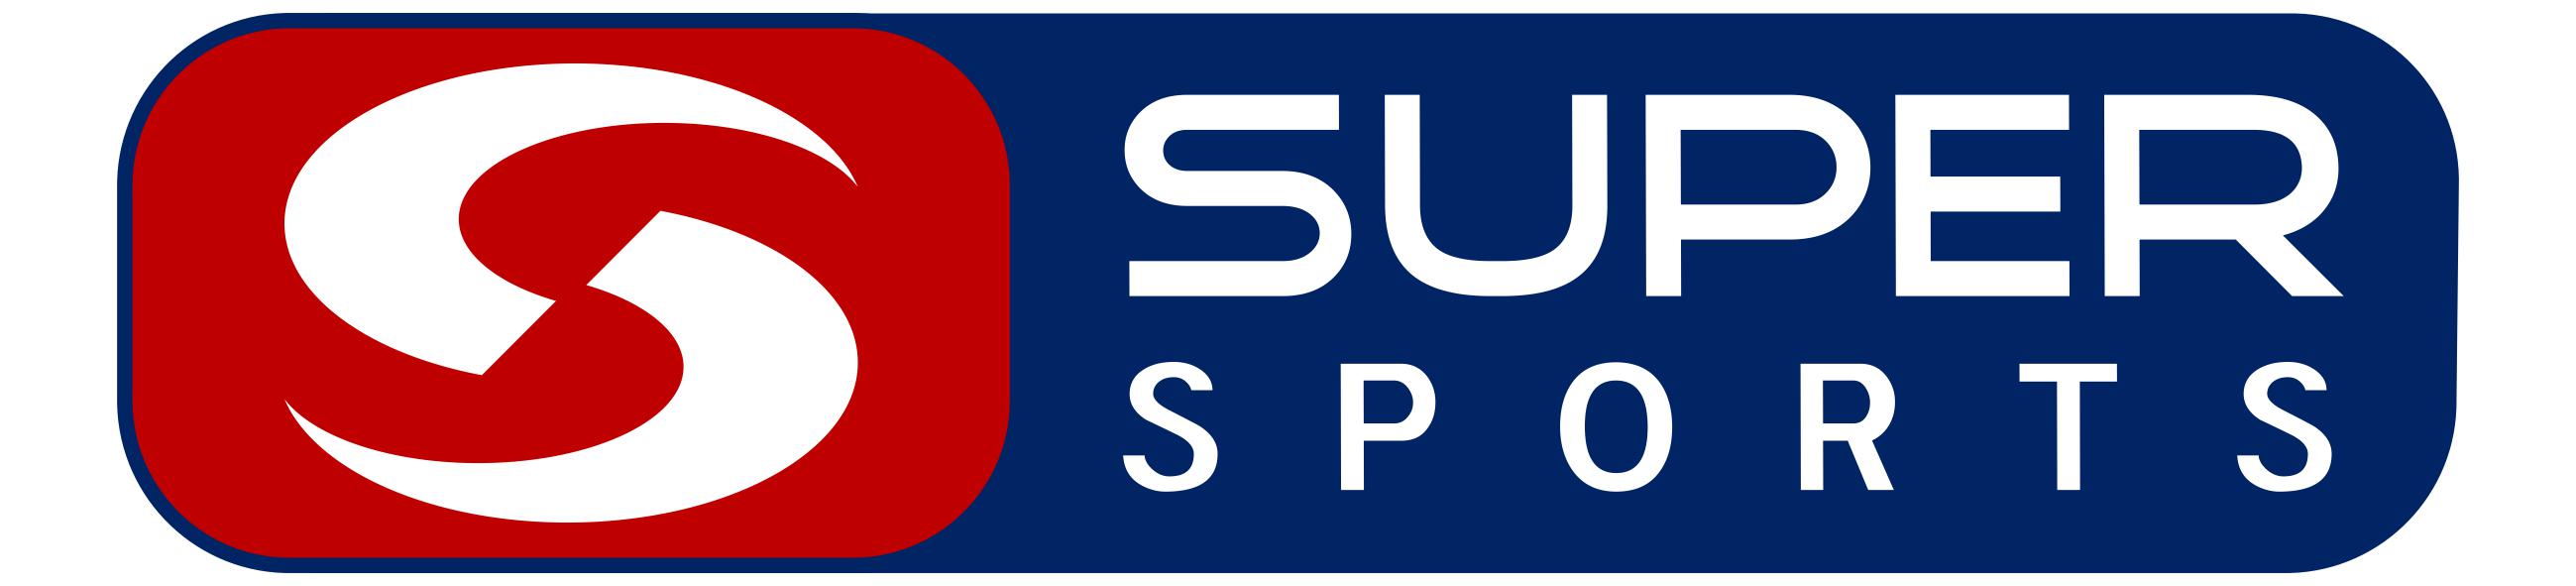 super sports logo